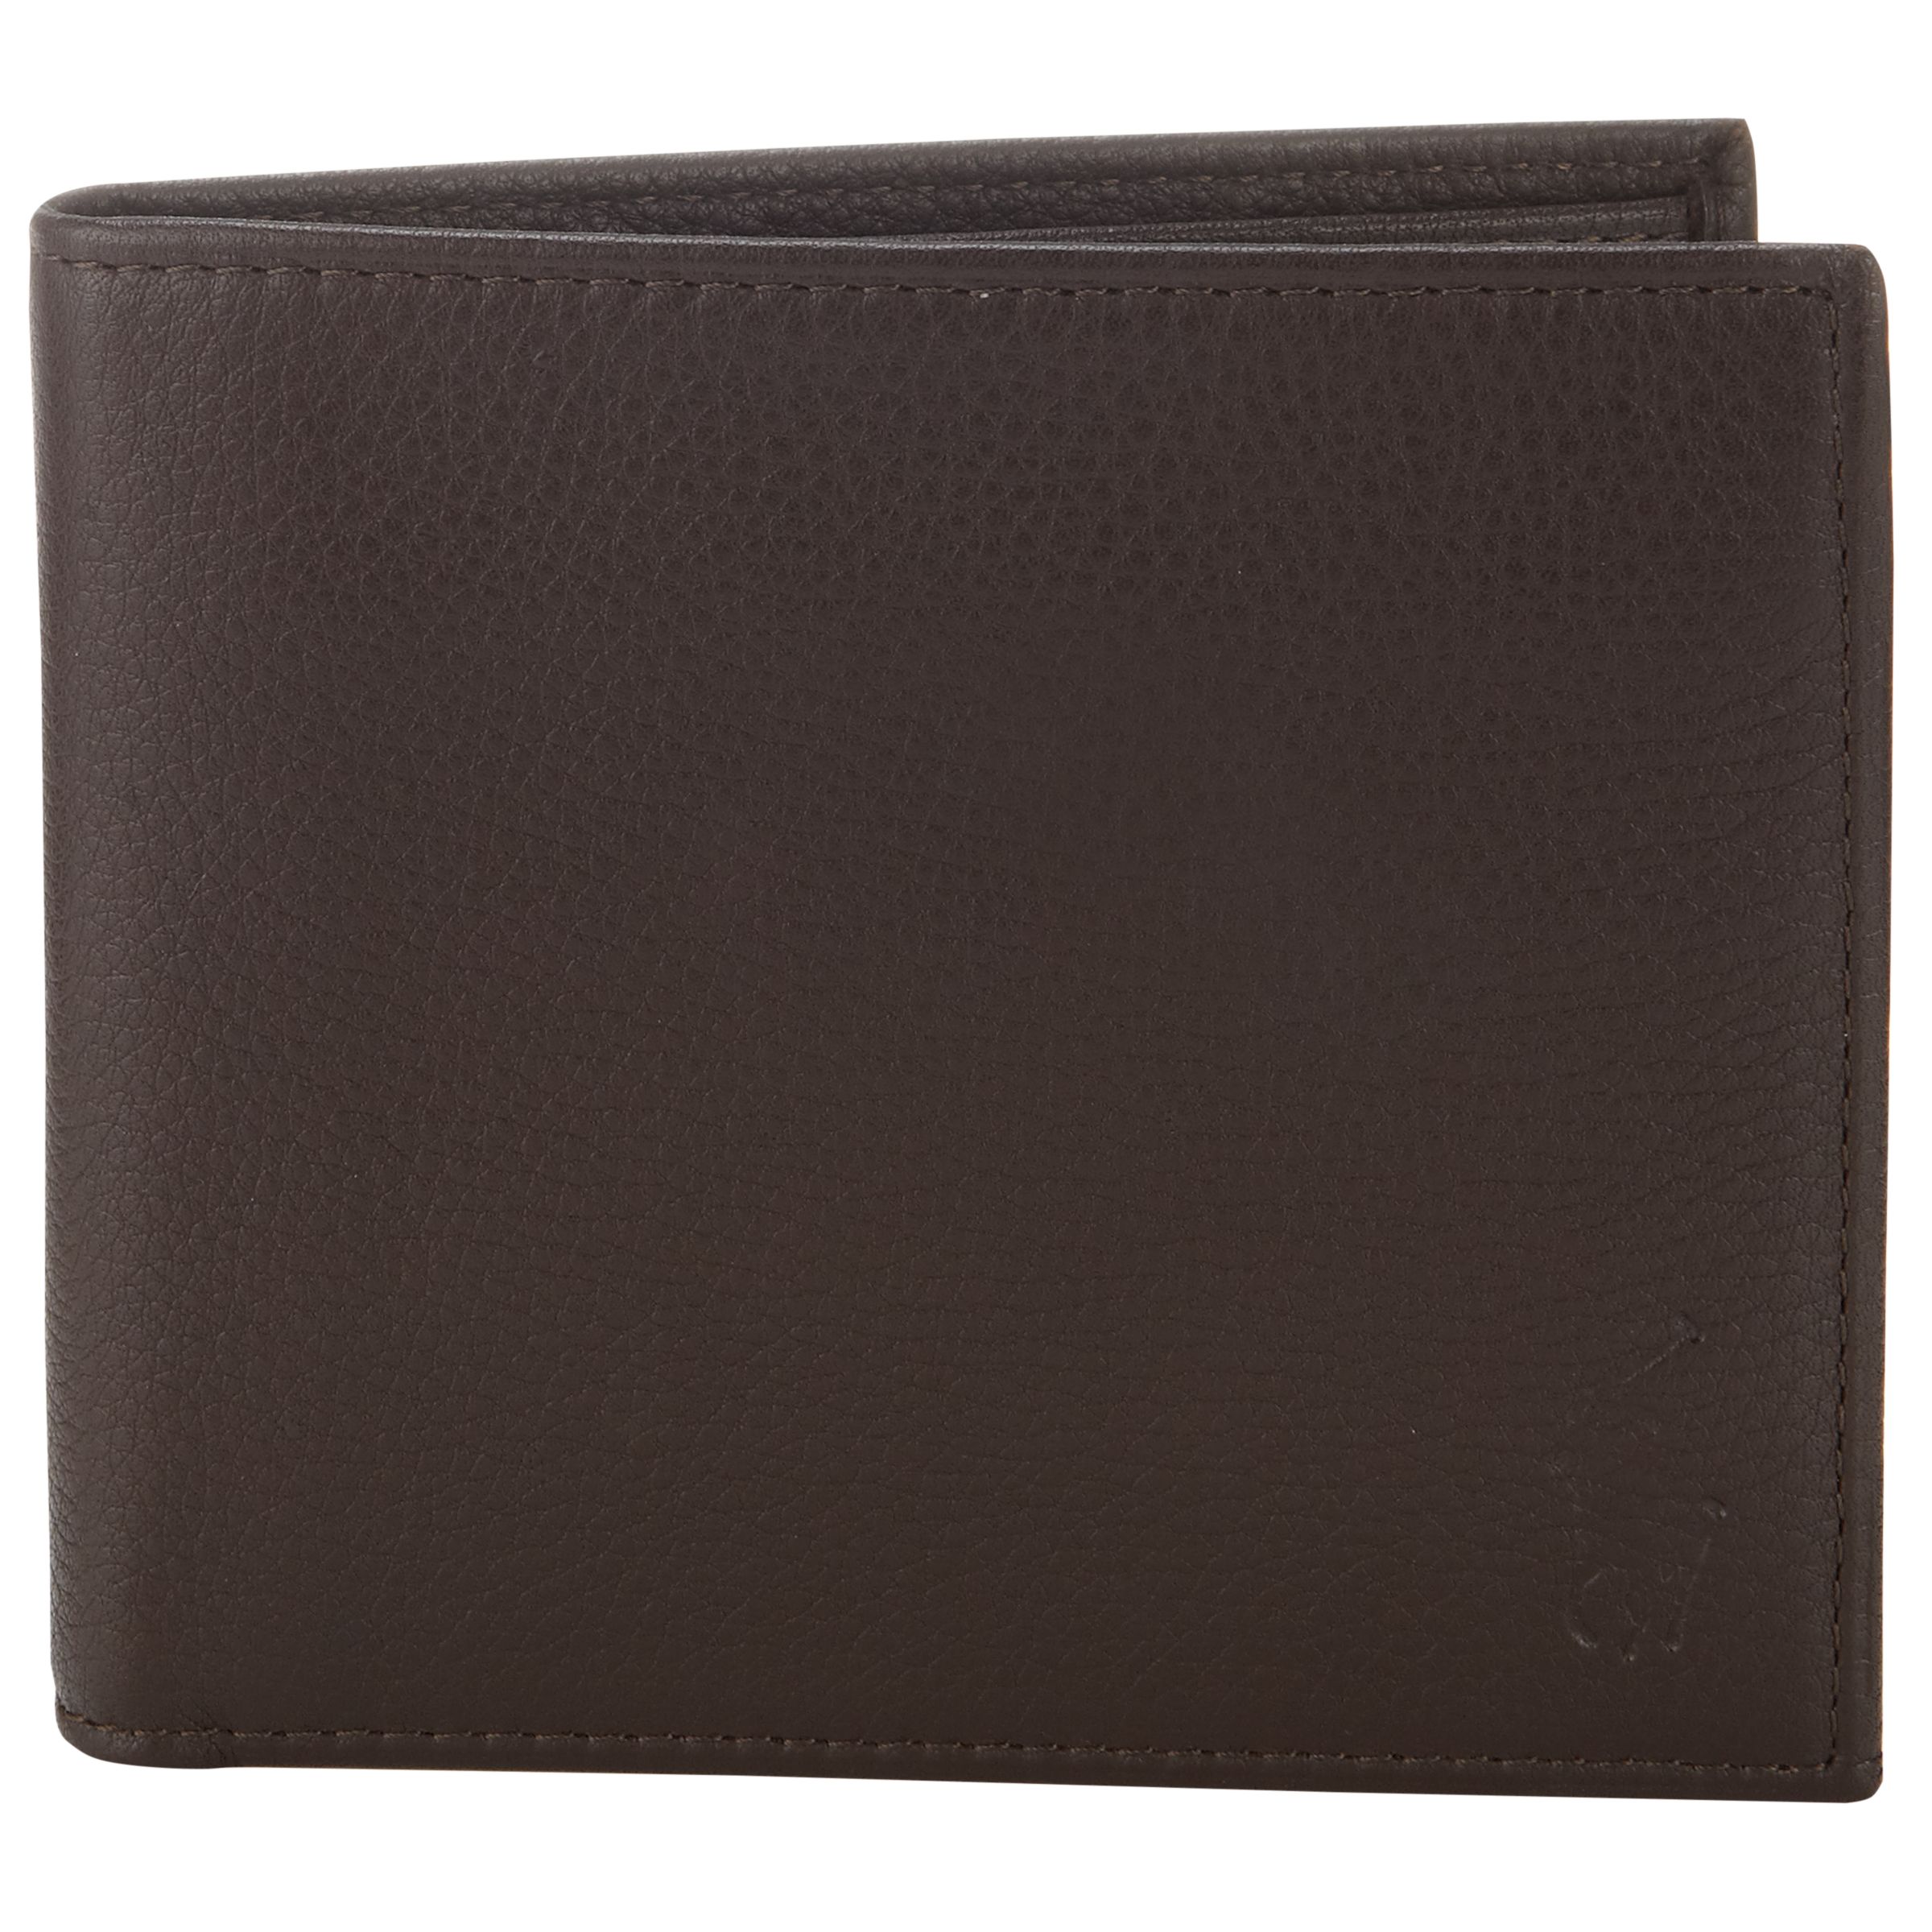 Polo Ralph Lauren Pebble Grain Leather Wallet